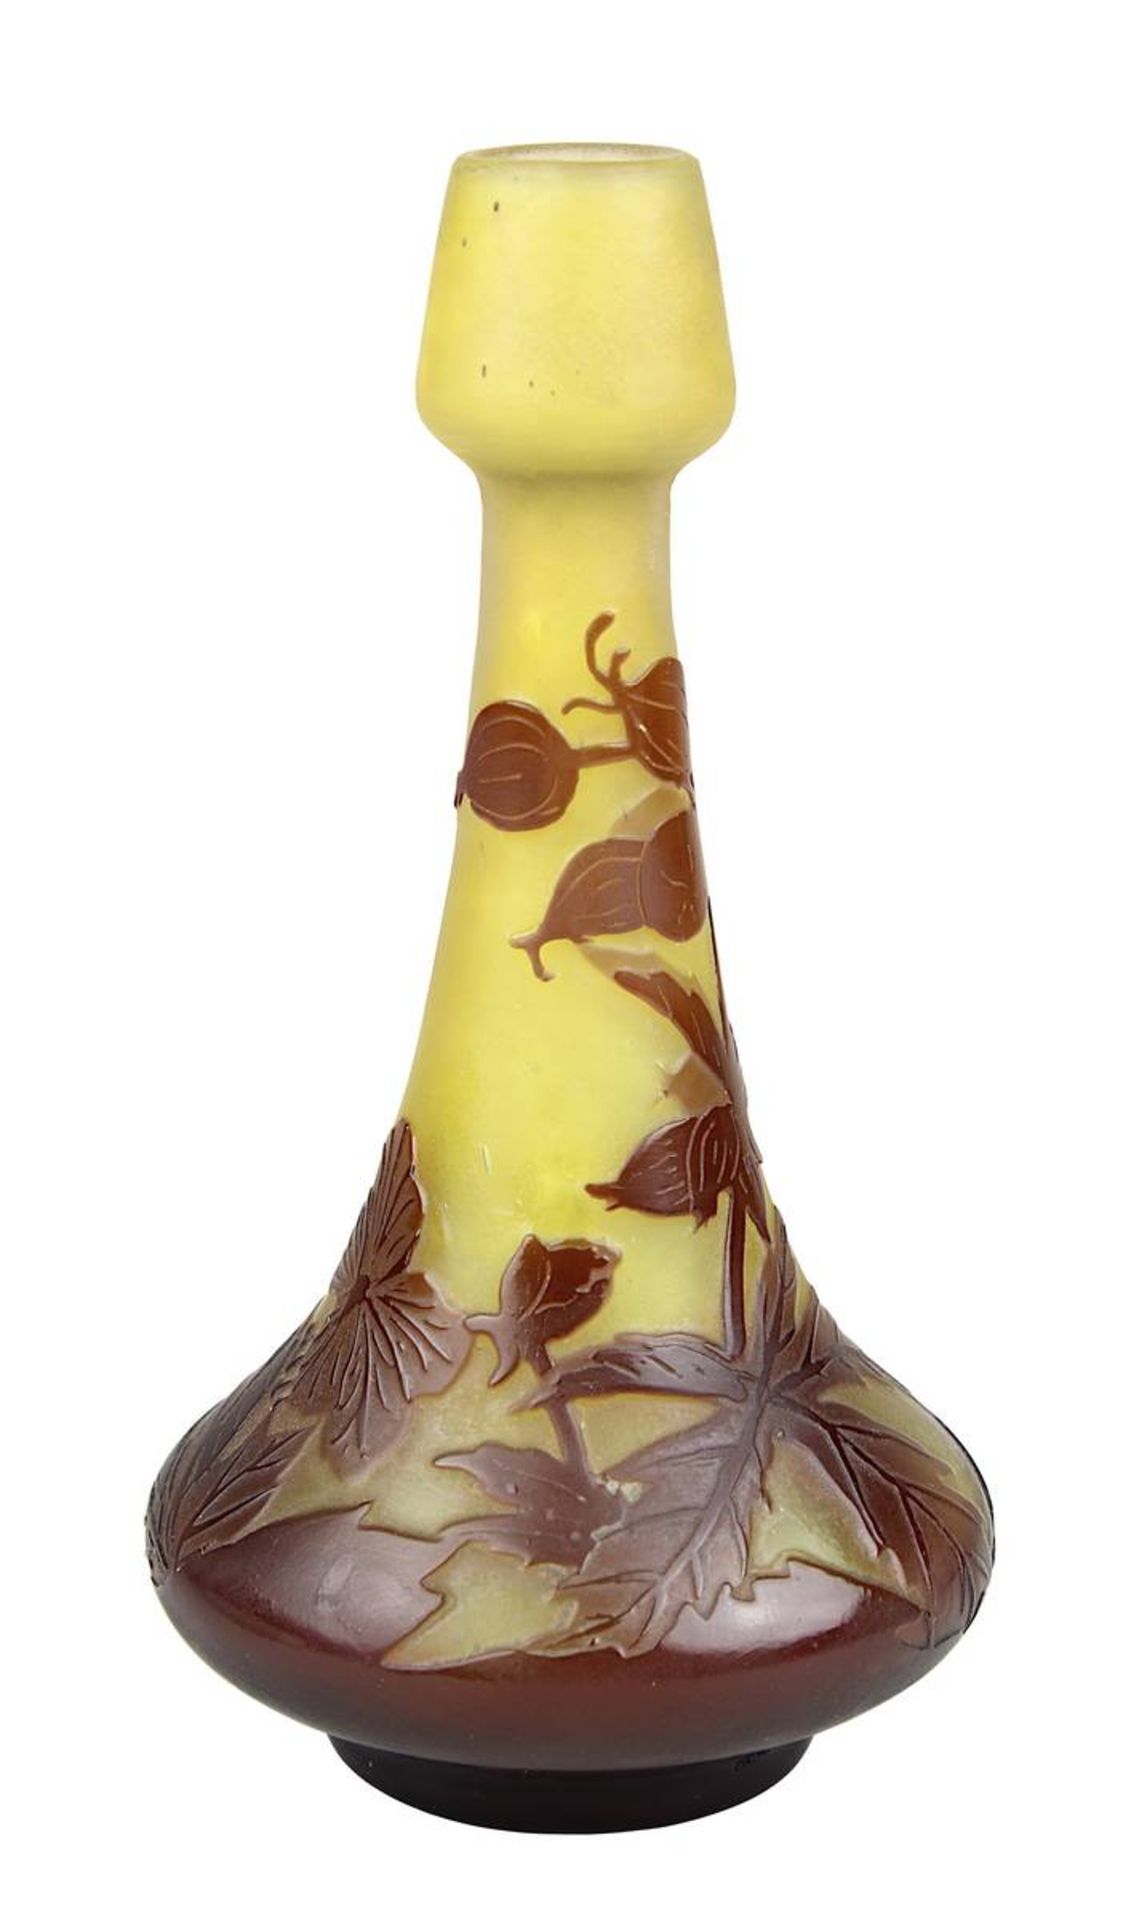 Gallé Miniatur-Jugendstil-Vase mit Hibiskusdekor, Nancy 1914-20, Klarglaskorpus mit gelbem